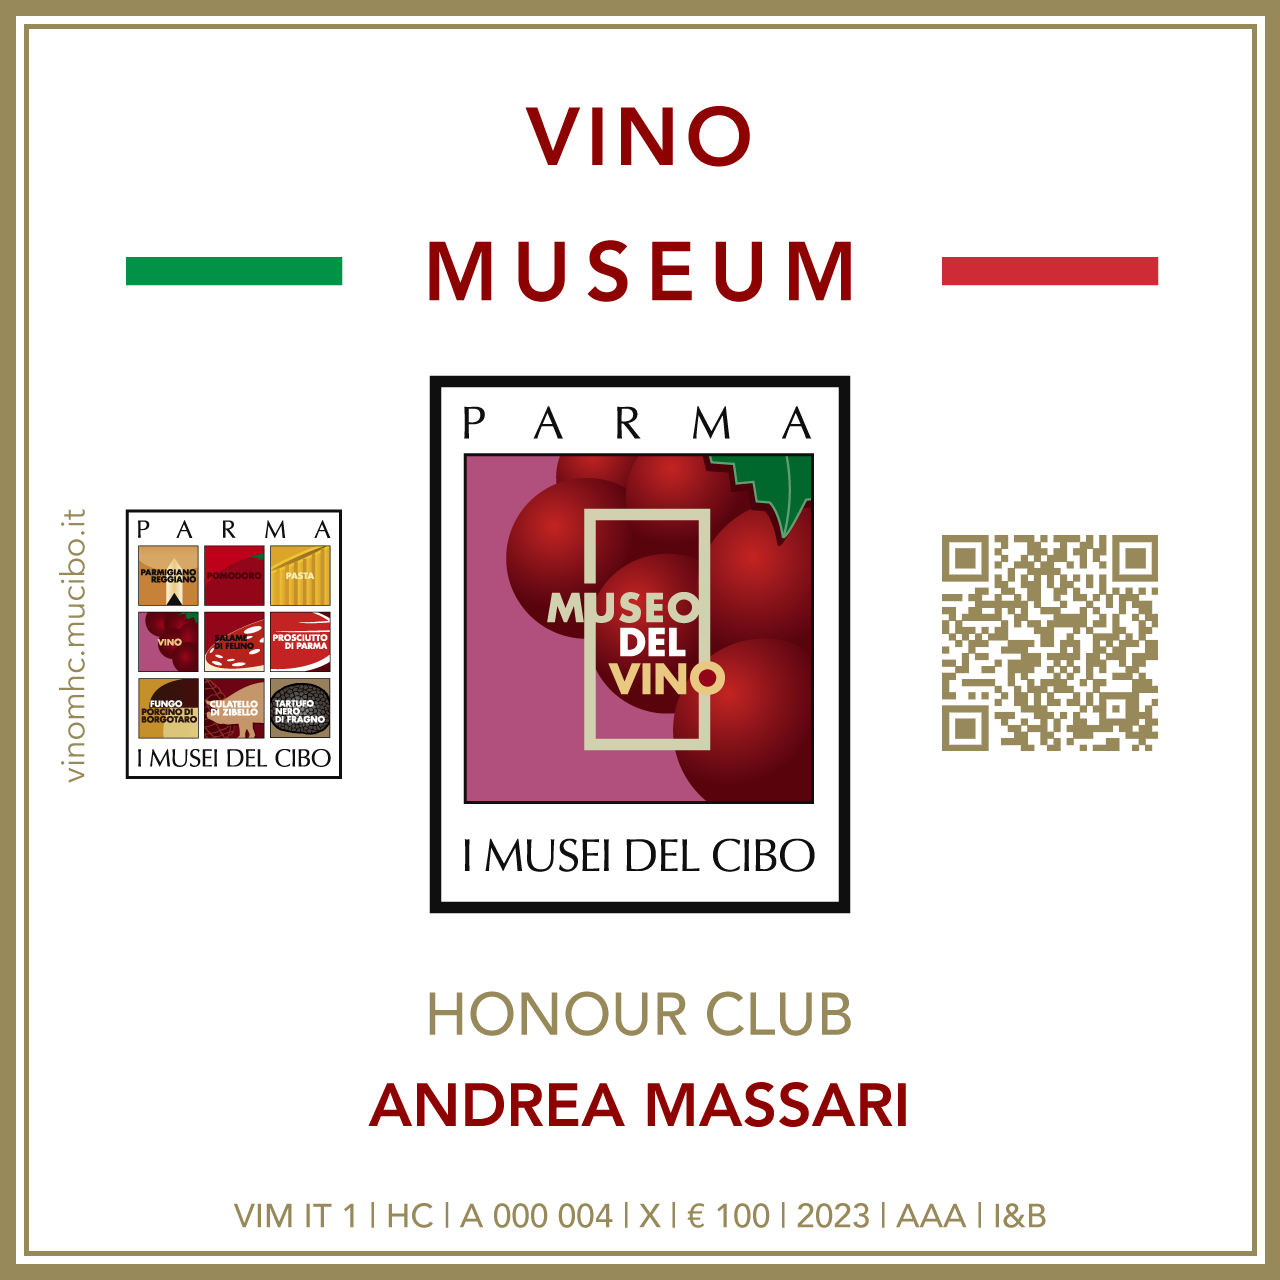 Vino Museum Honour Club - Token Id A 000 004 - ANDREA MASSARI